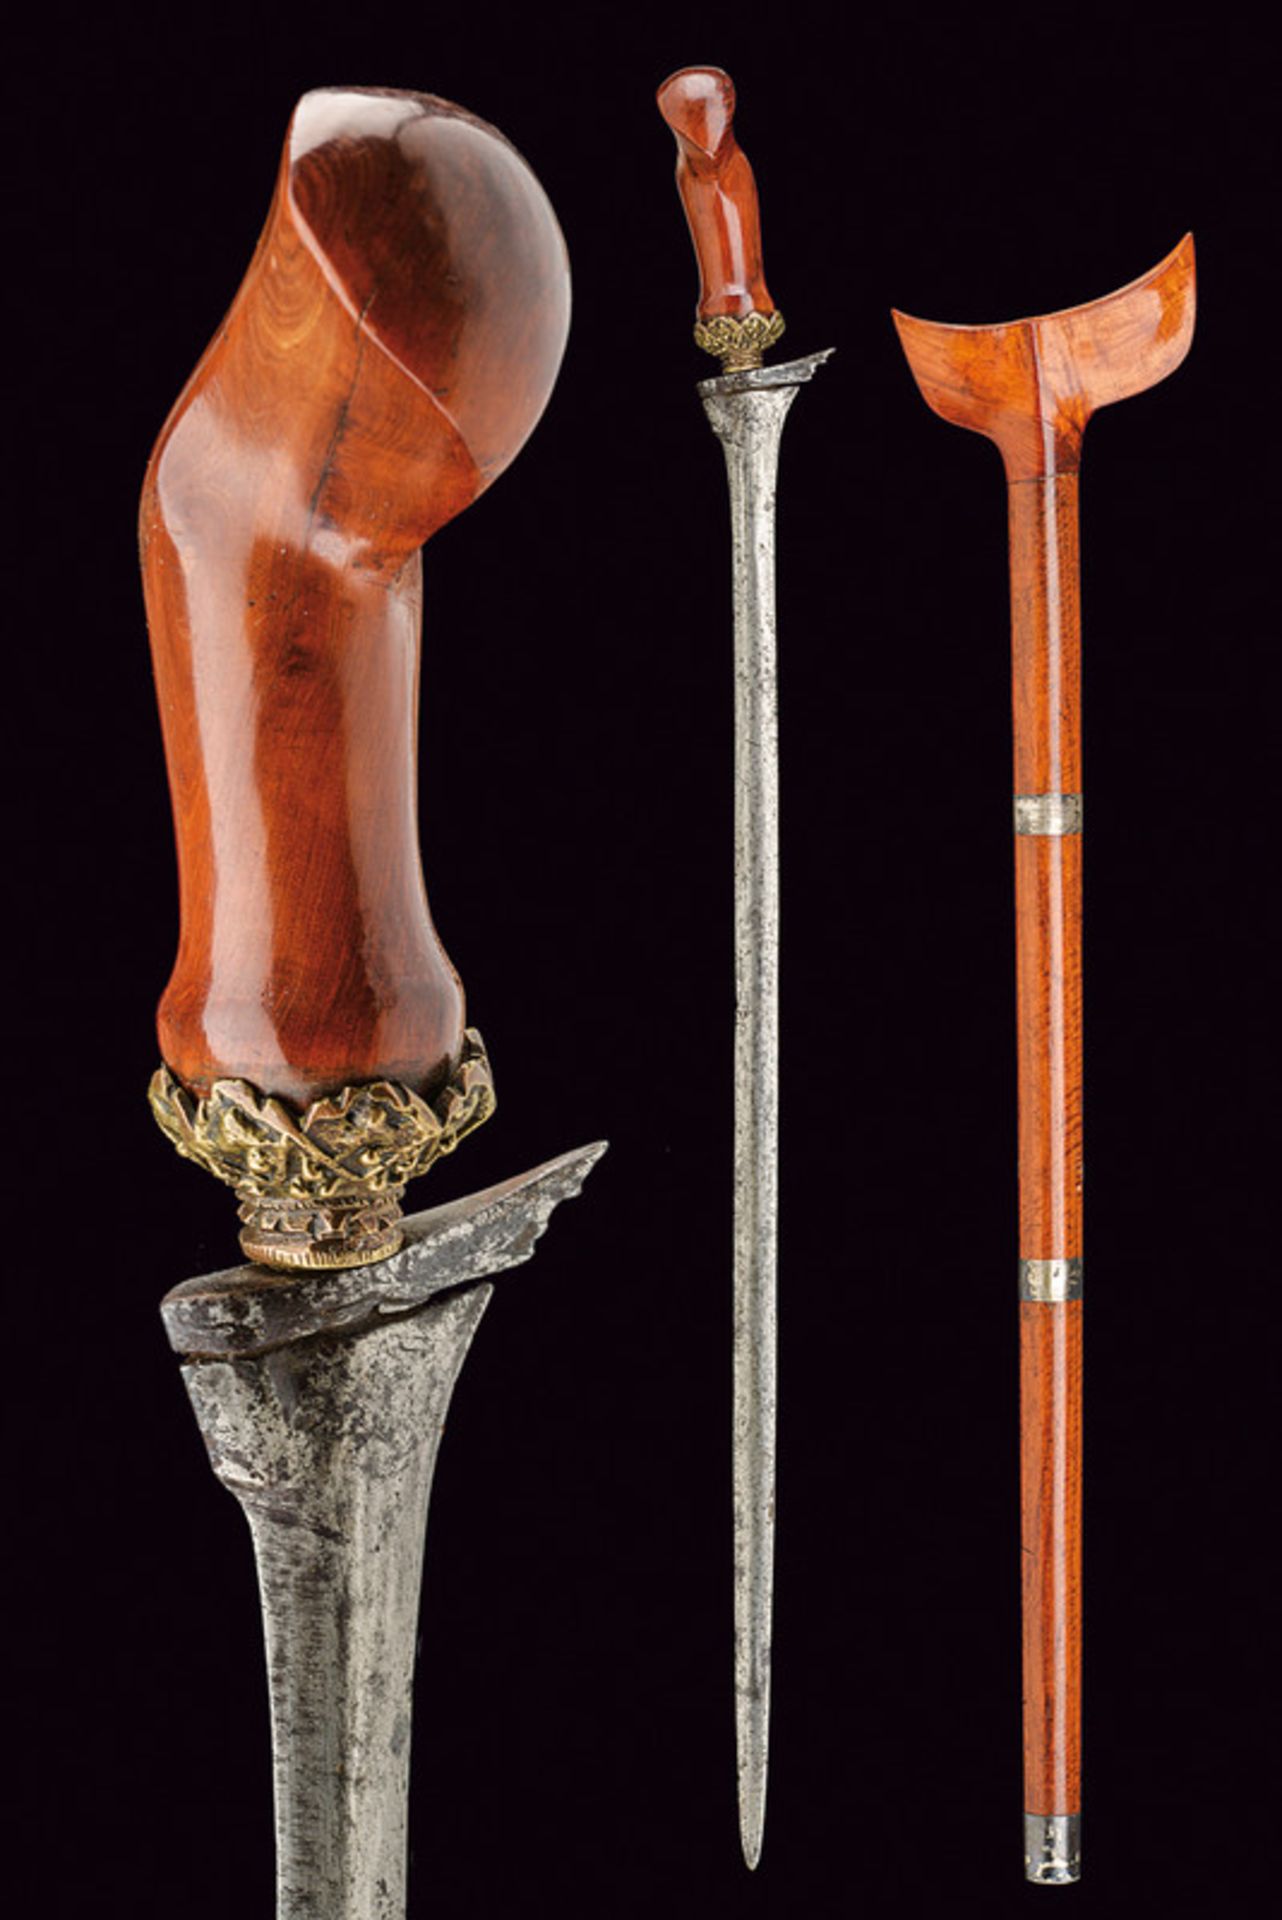 A execution kris dating: circa 1900 provenance: Giava Long, double-edged blade of lenticular